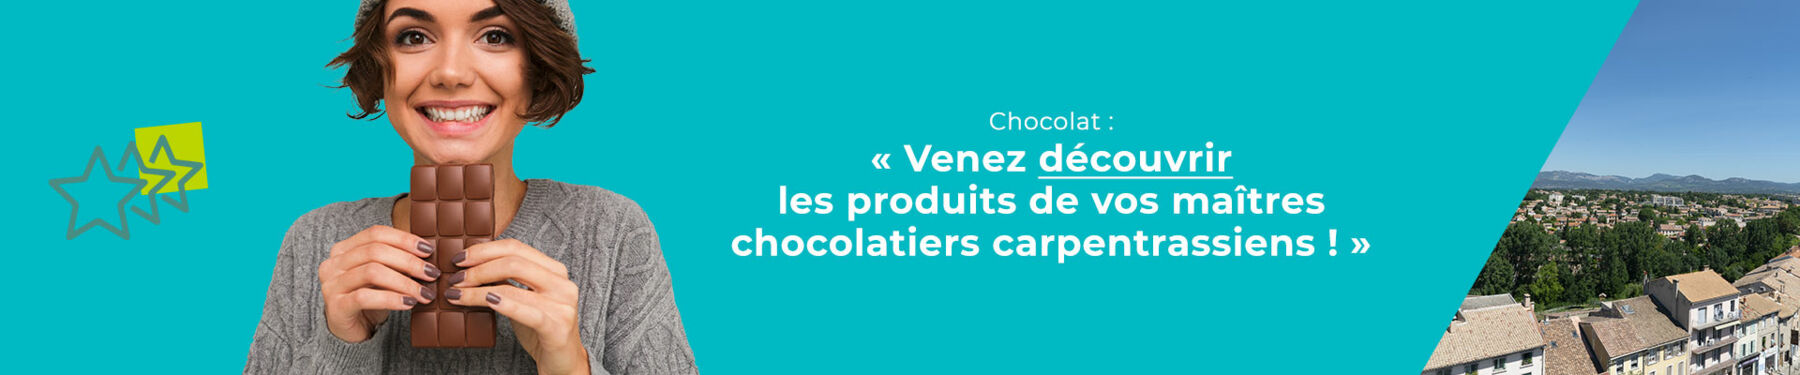 catégorie chocolat